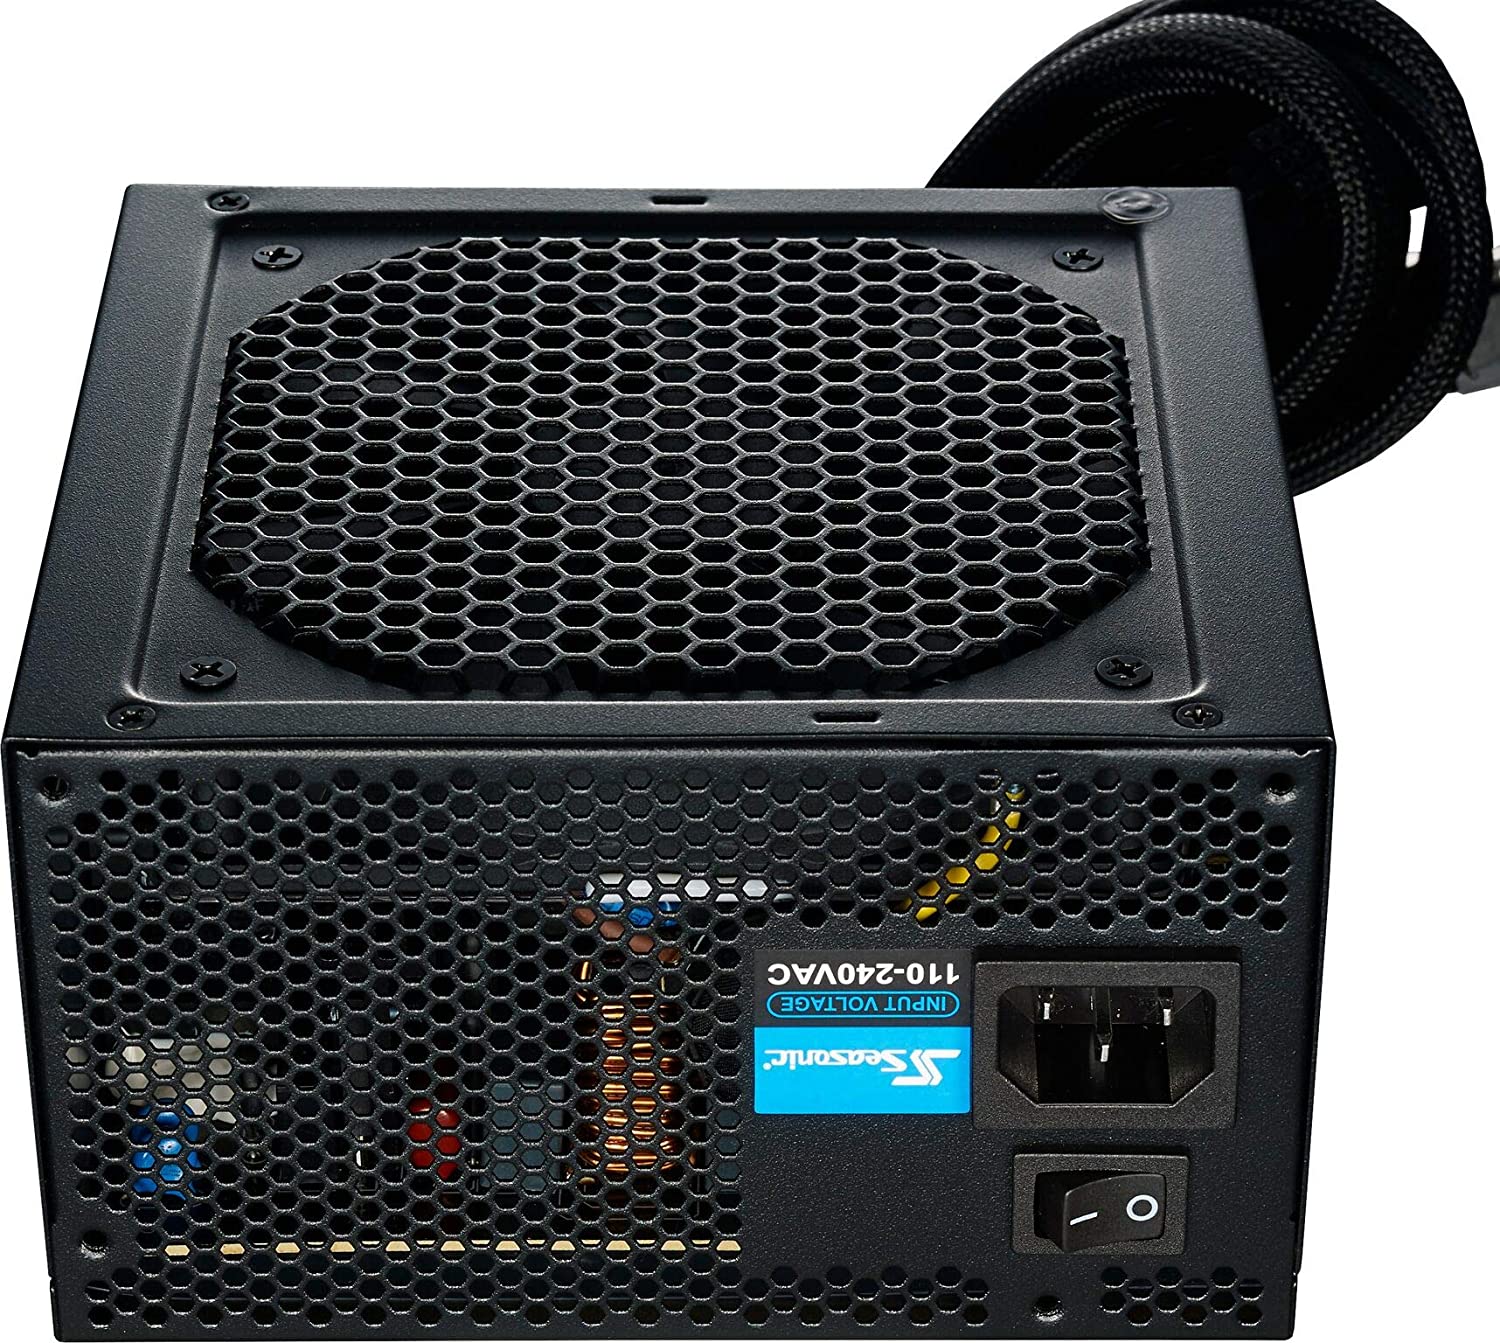 Seasonic S12III 650 W 80+ Bronze, ATX12V & EPS12V, Direct Output, Smart & Silent Fan Control Power Supply (650 SSR-650GB3)